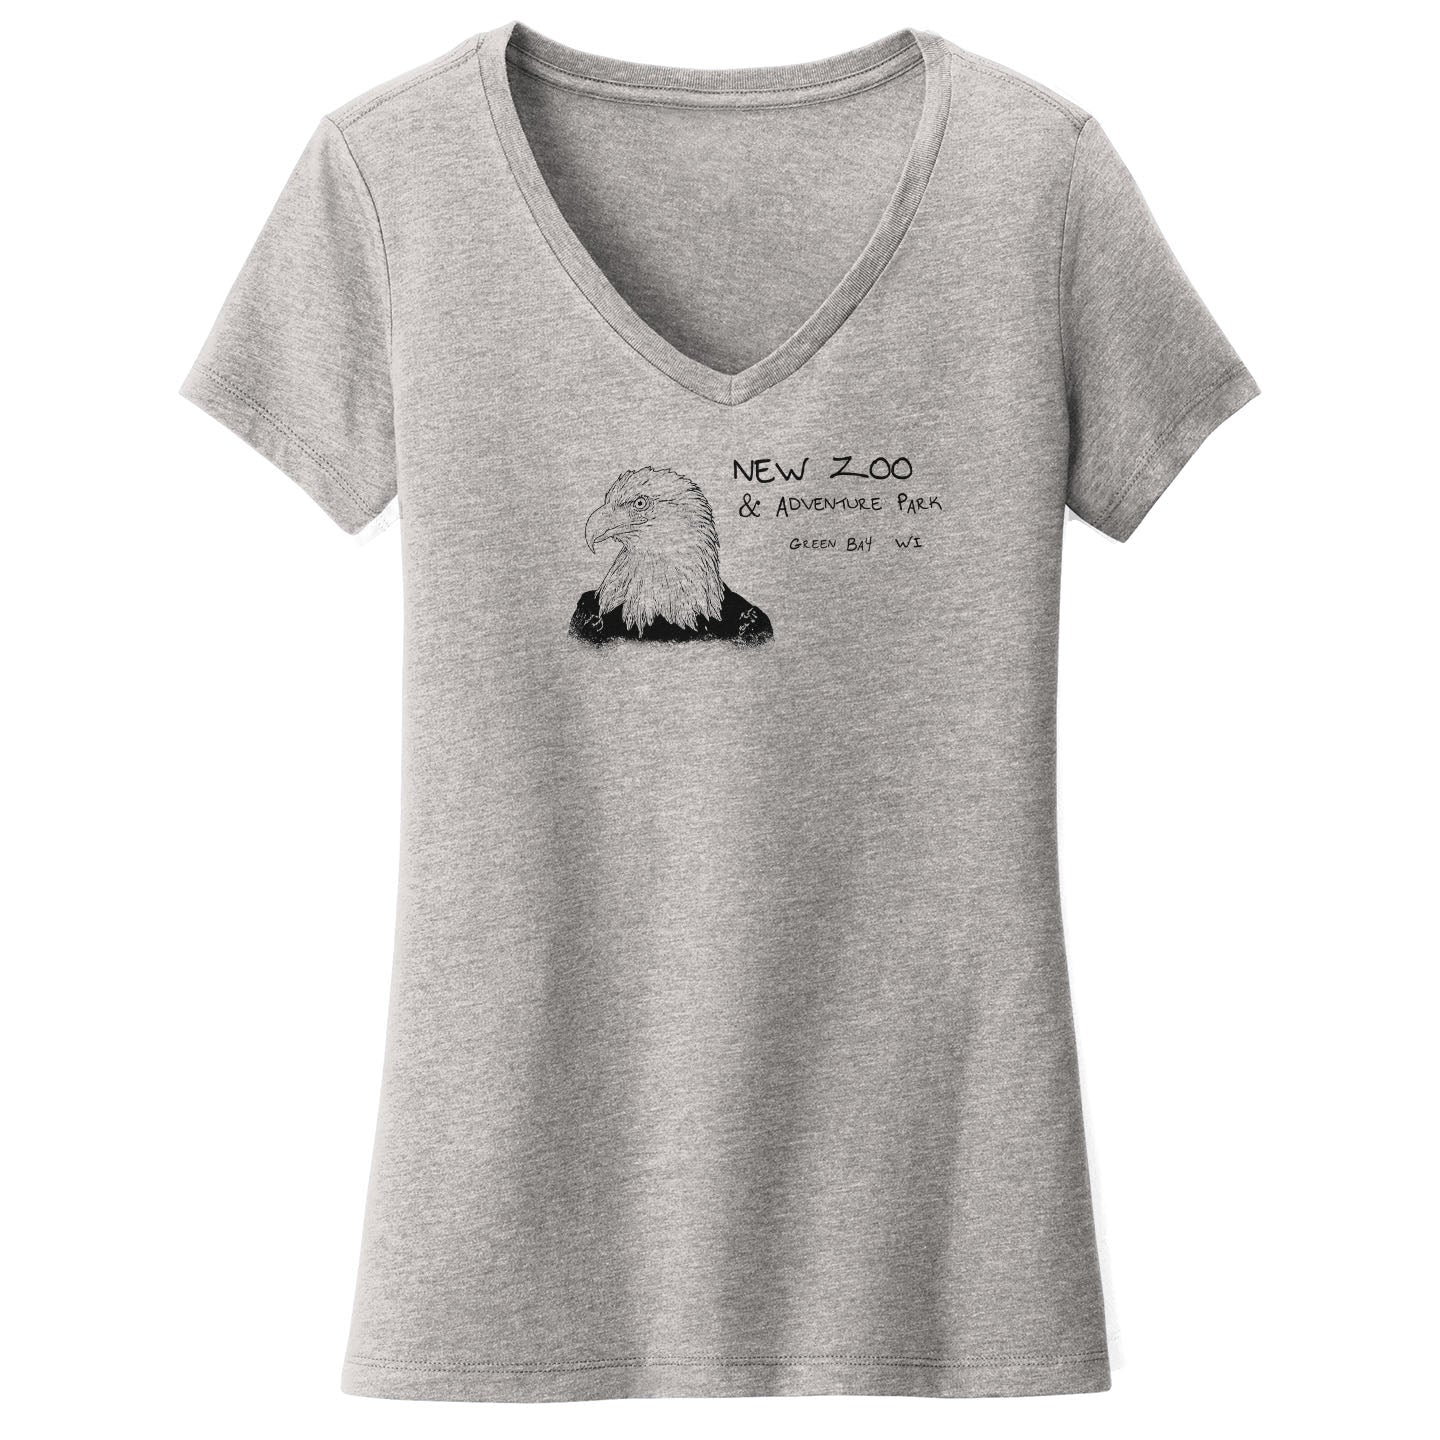 NEW Zoo Bald Eagle Outline - Women's V-Neck T-Shirt